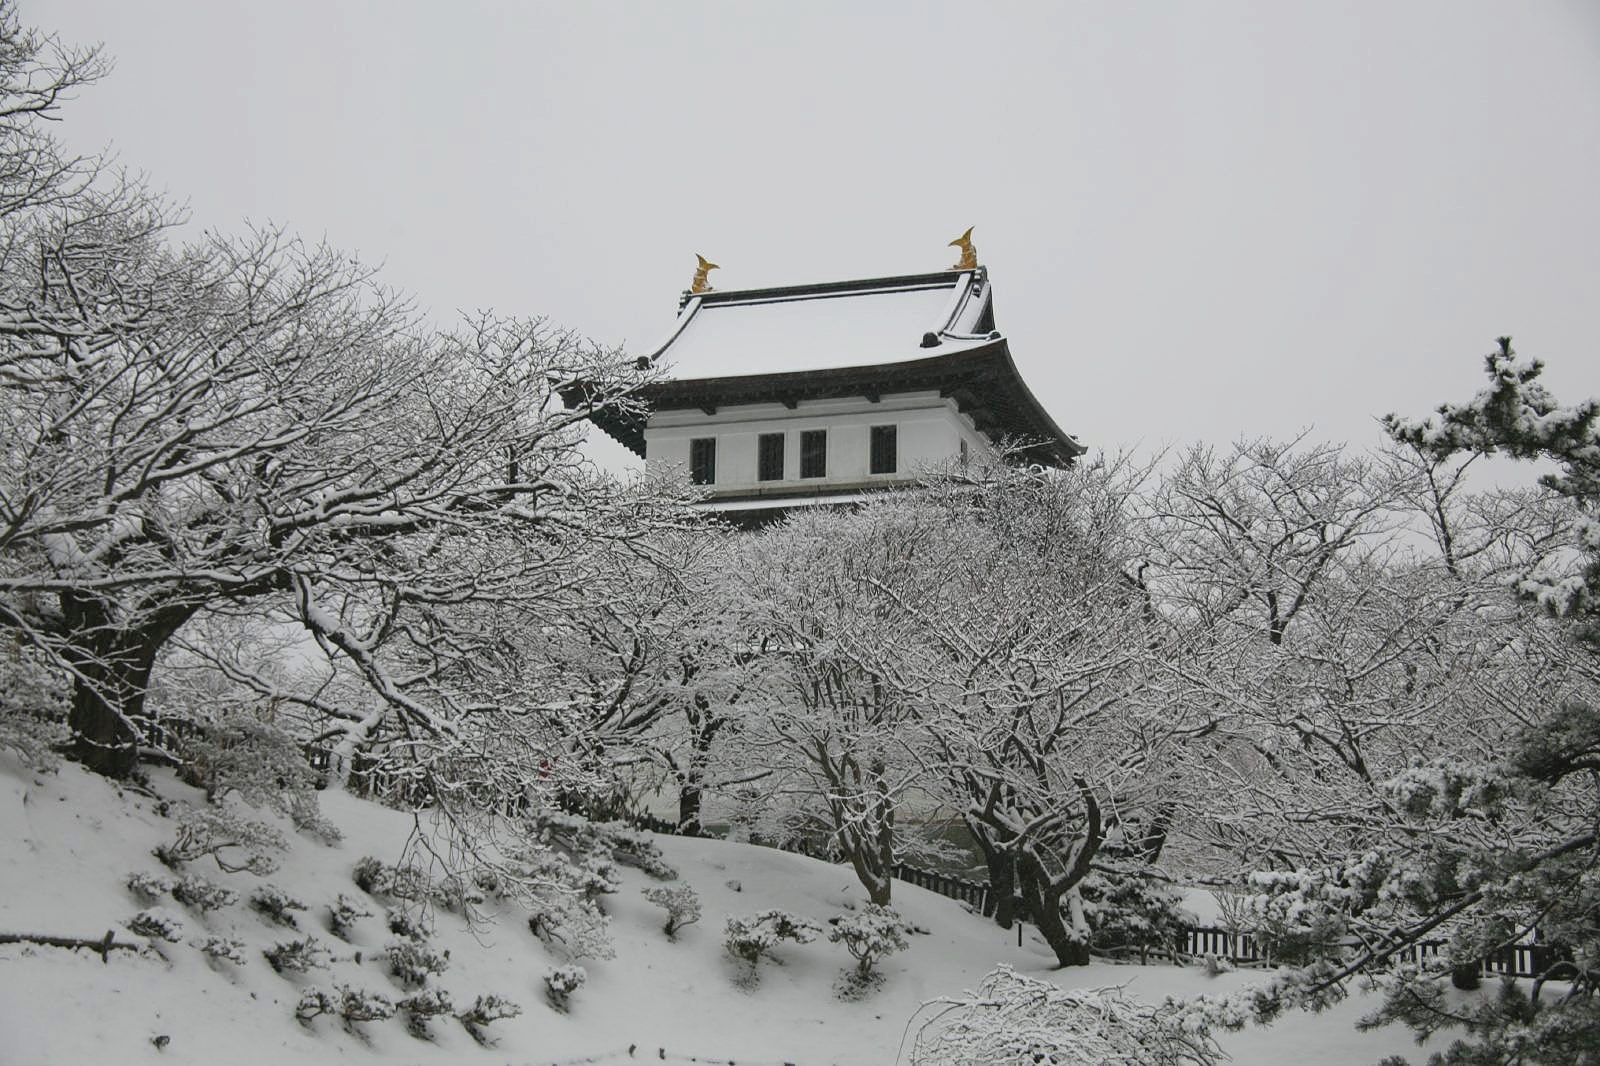 Matsumae castle